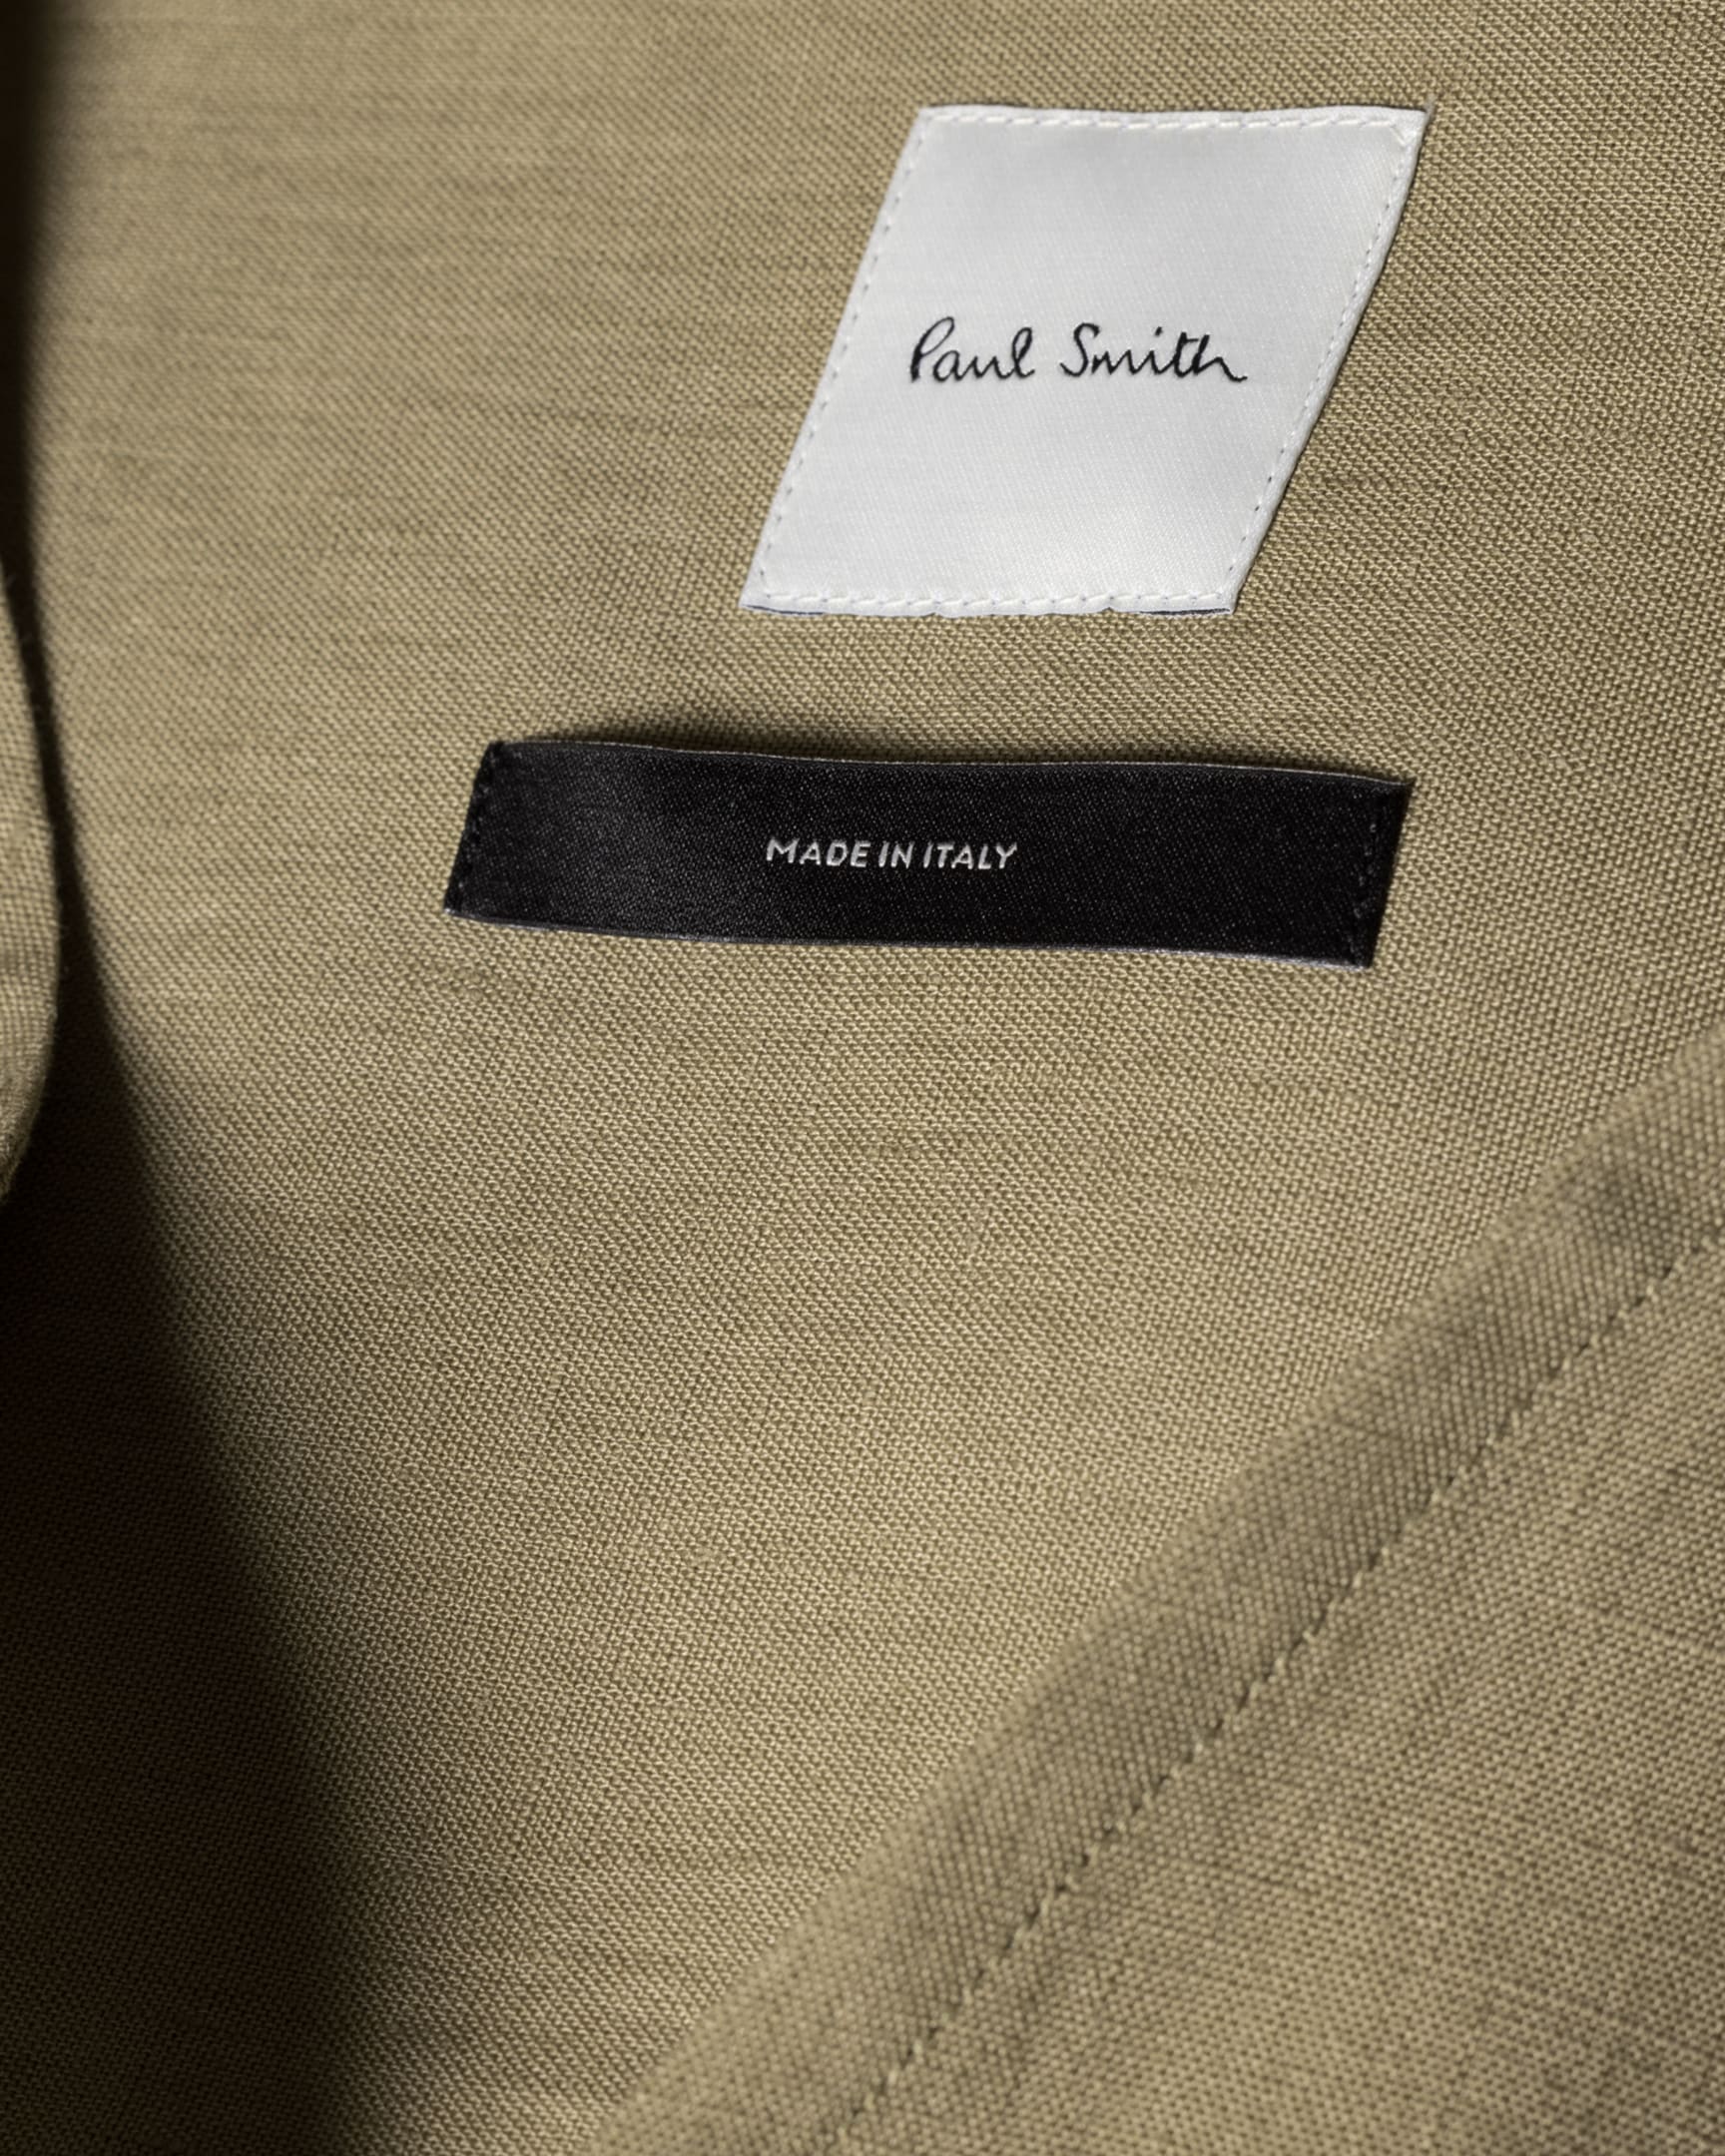 Detail View - Women's Pale Khaki Linen Tie Waist Dress Paul Smith